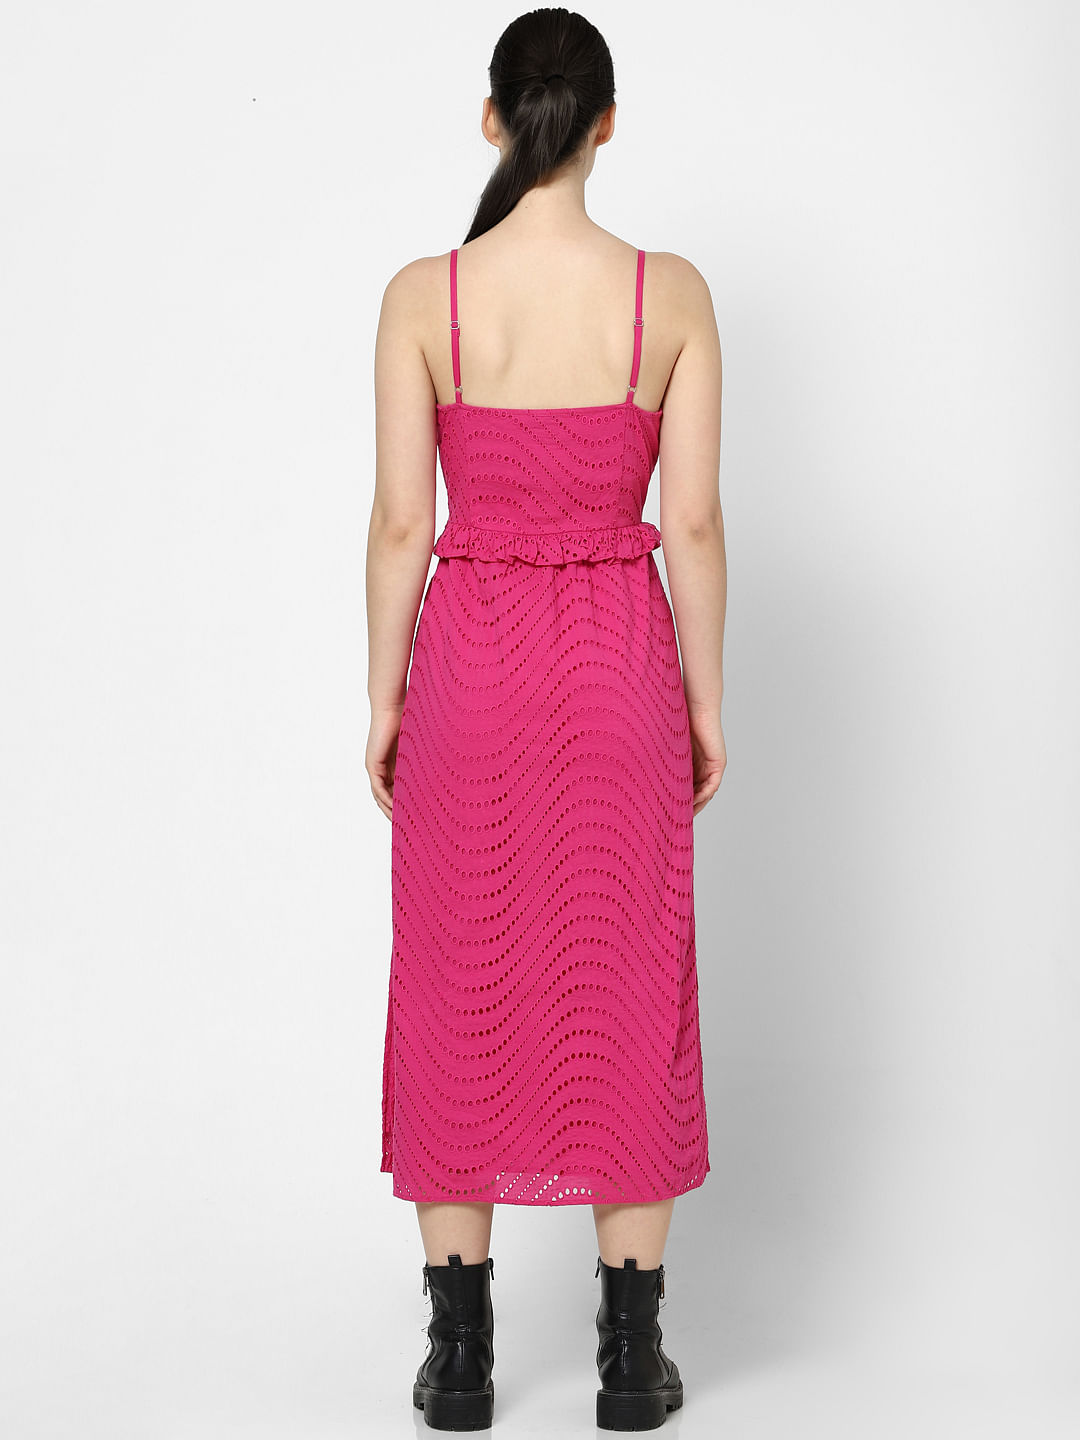 Denim Wrap Style Cami Dress - Buy Fashion Wholesale in The UK